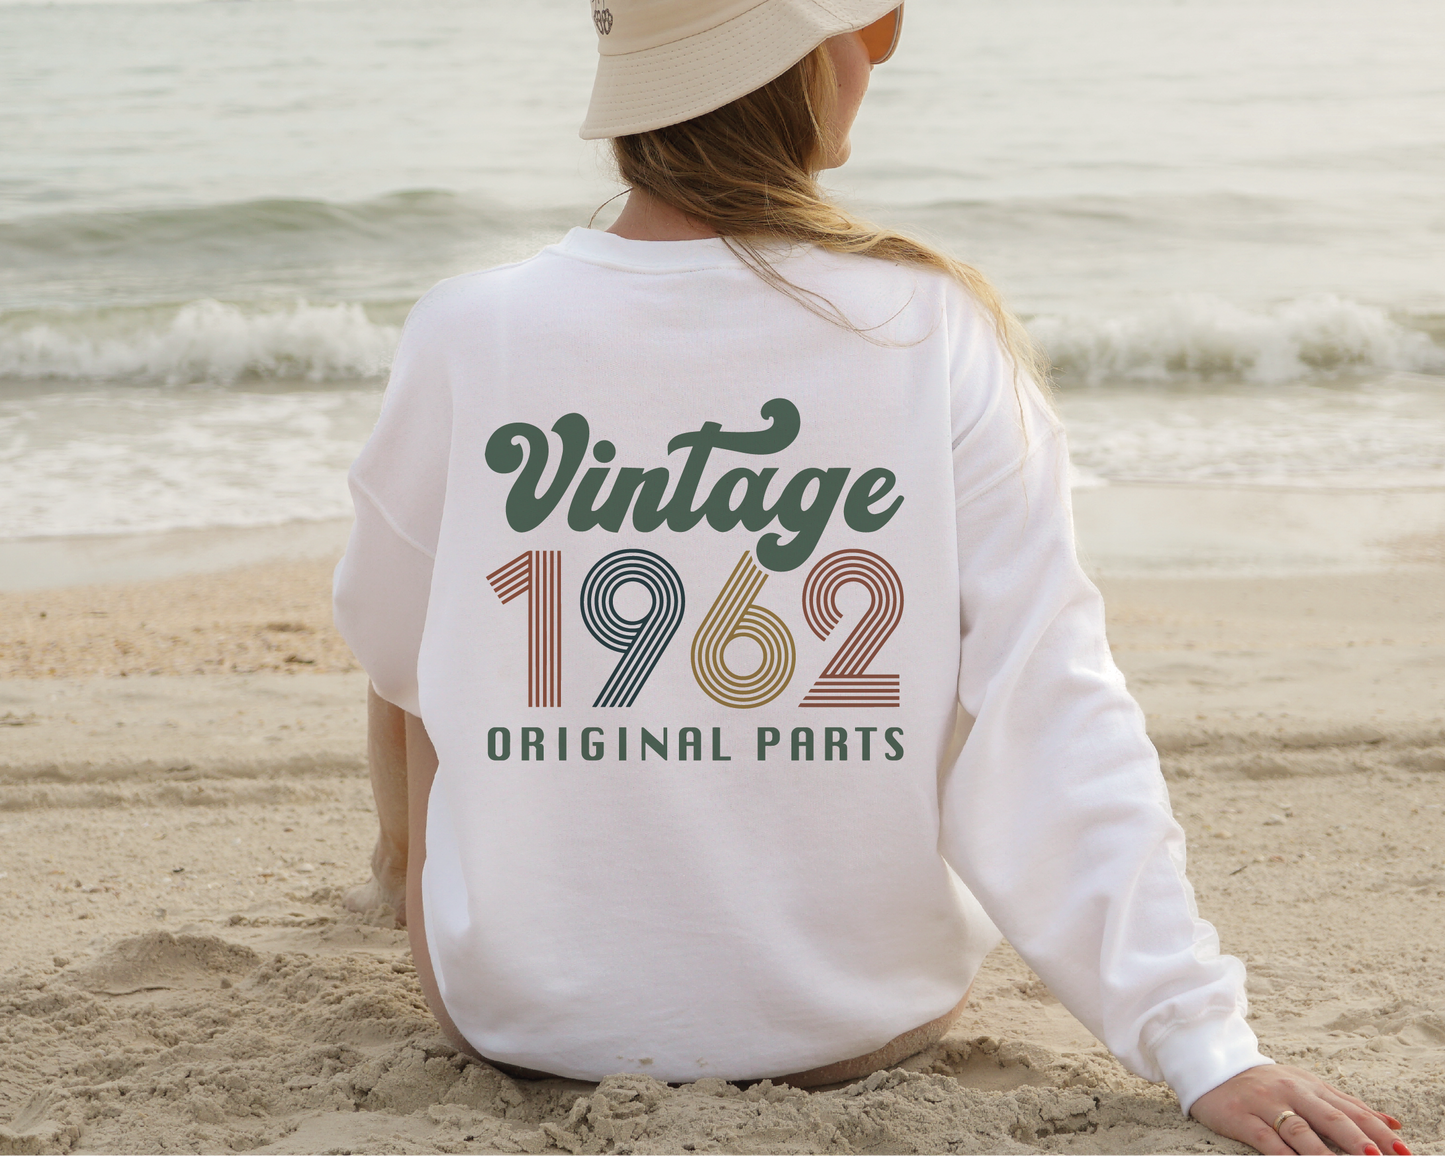 Vintage 1962 Original Parts SVG PNG | Birthday Sublimation | T shirt Design Cut file